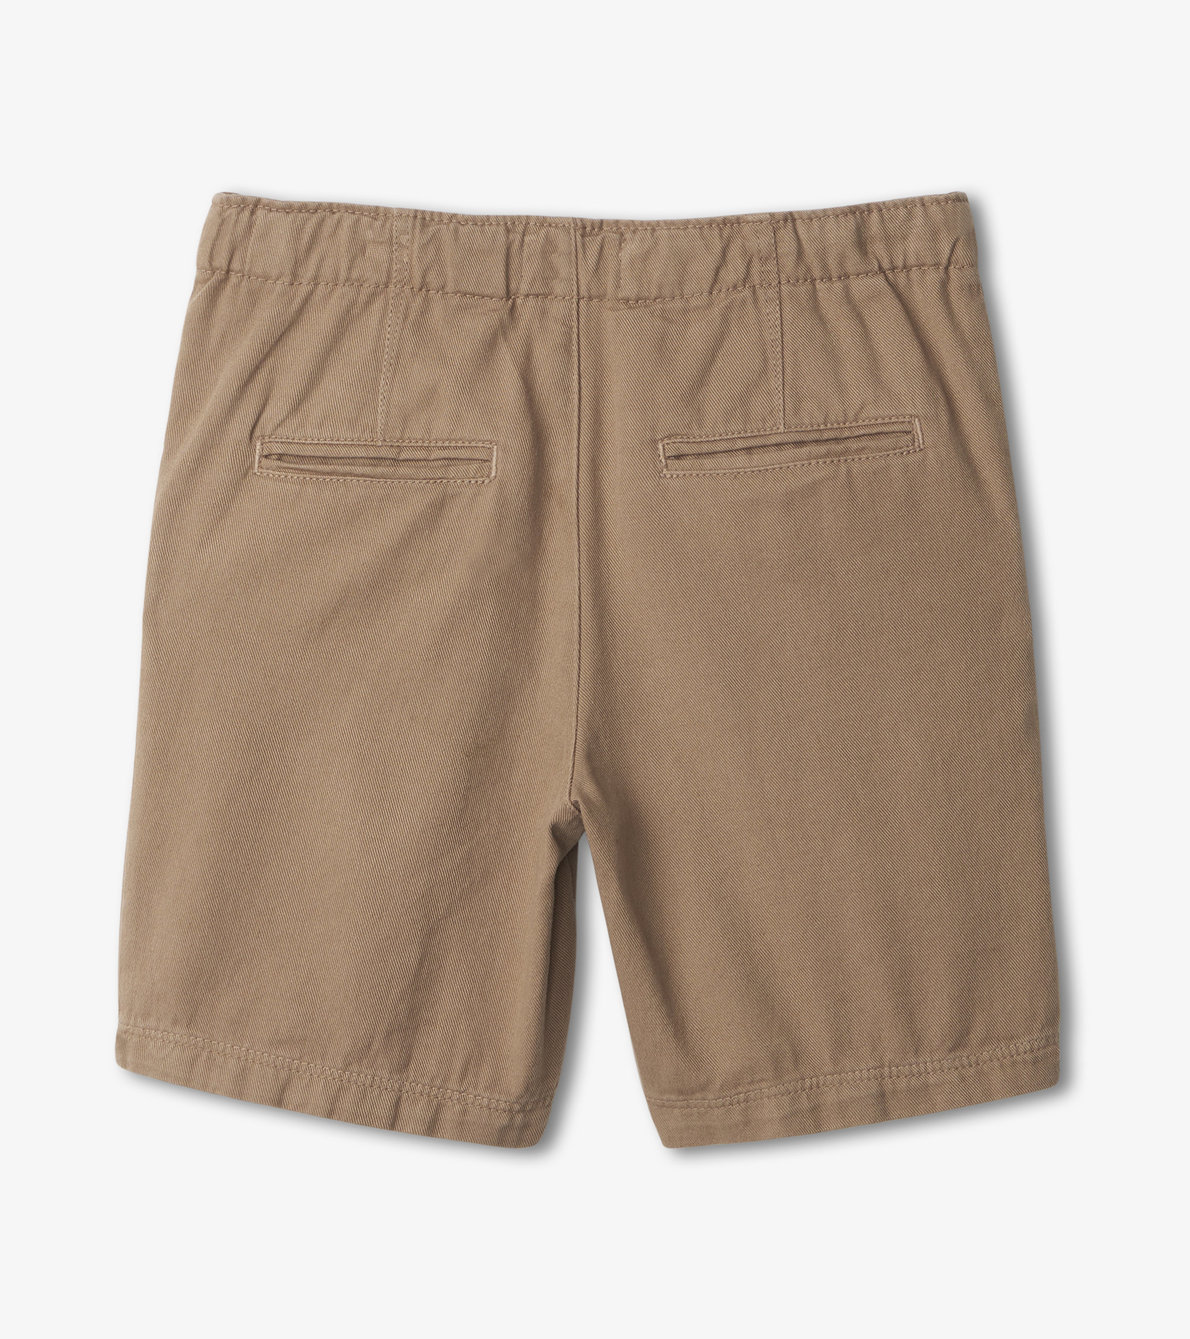 View larger image of Khaki Twill Shorts